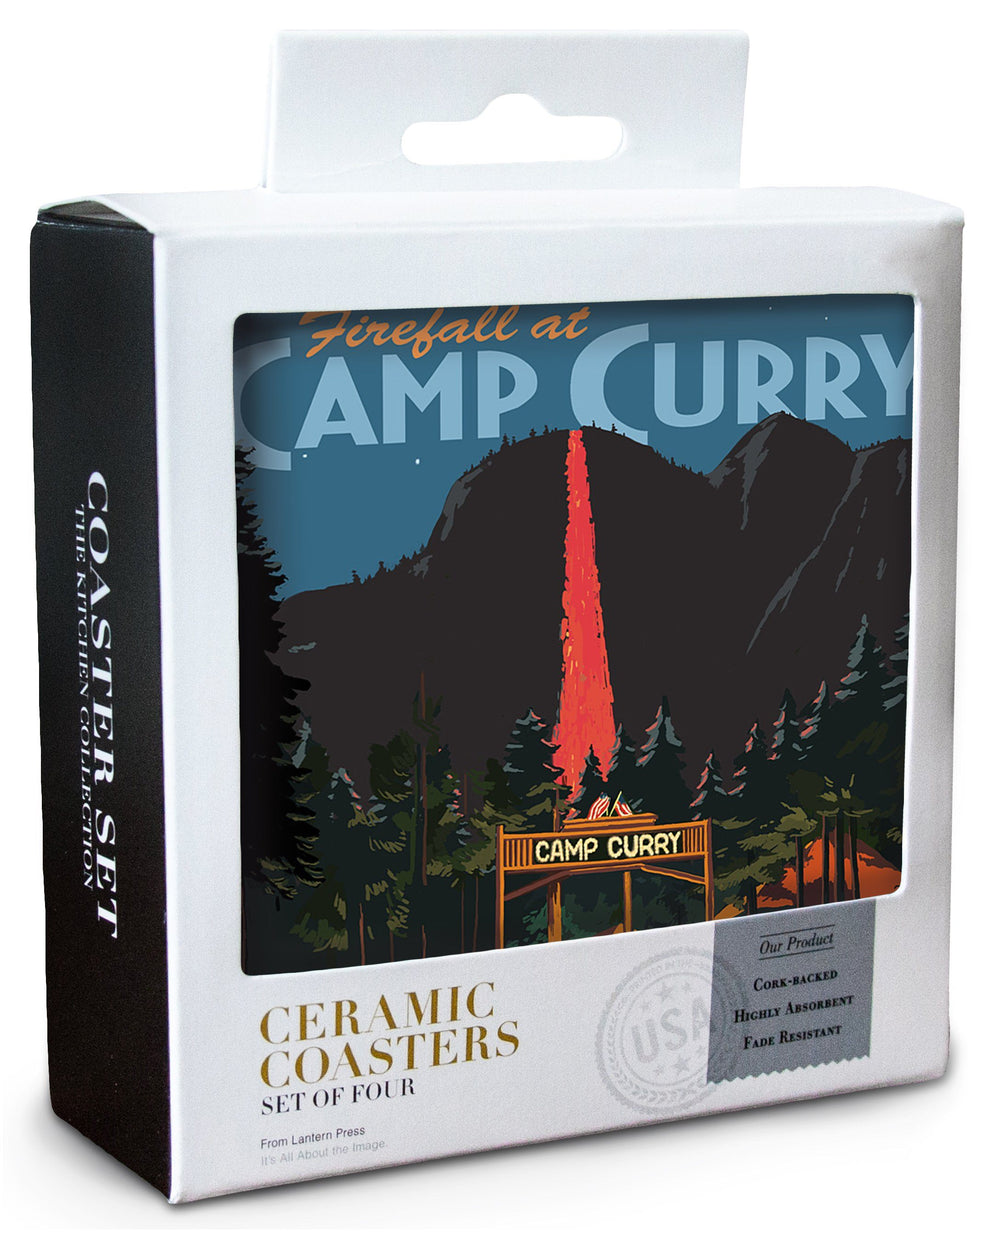 Yosemite National Park, California, Firefall and Camp Curry, Lantern Press Artwork, Coaster Set Coasters Nightingale Boutique 